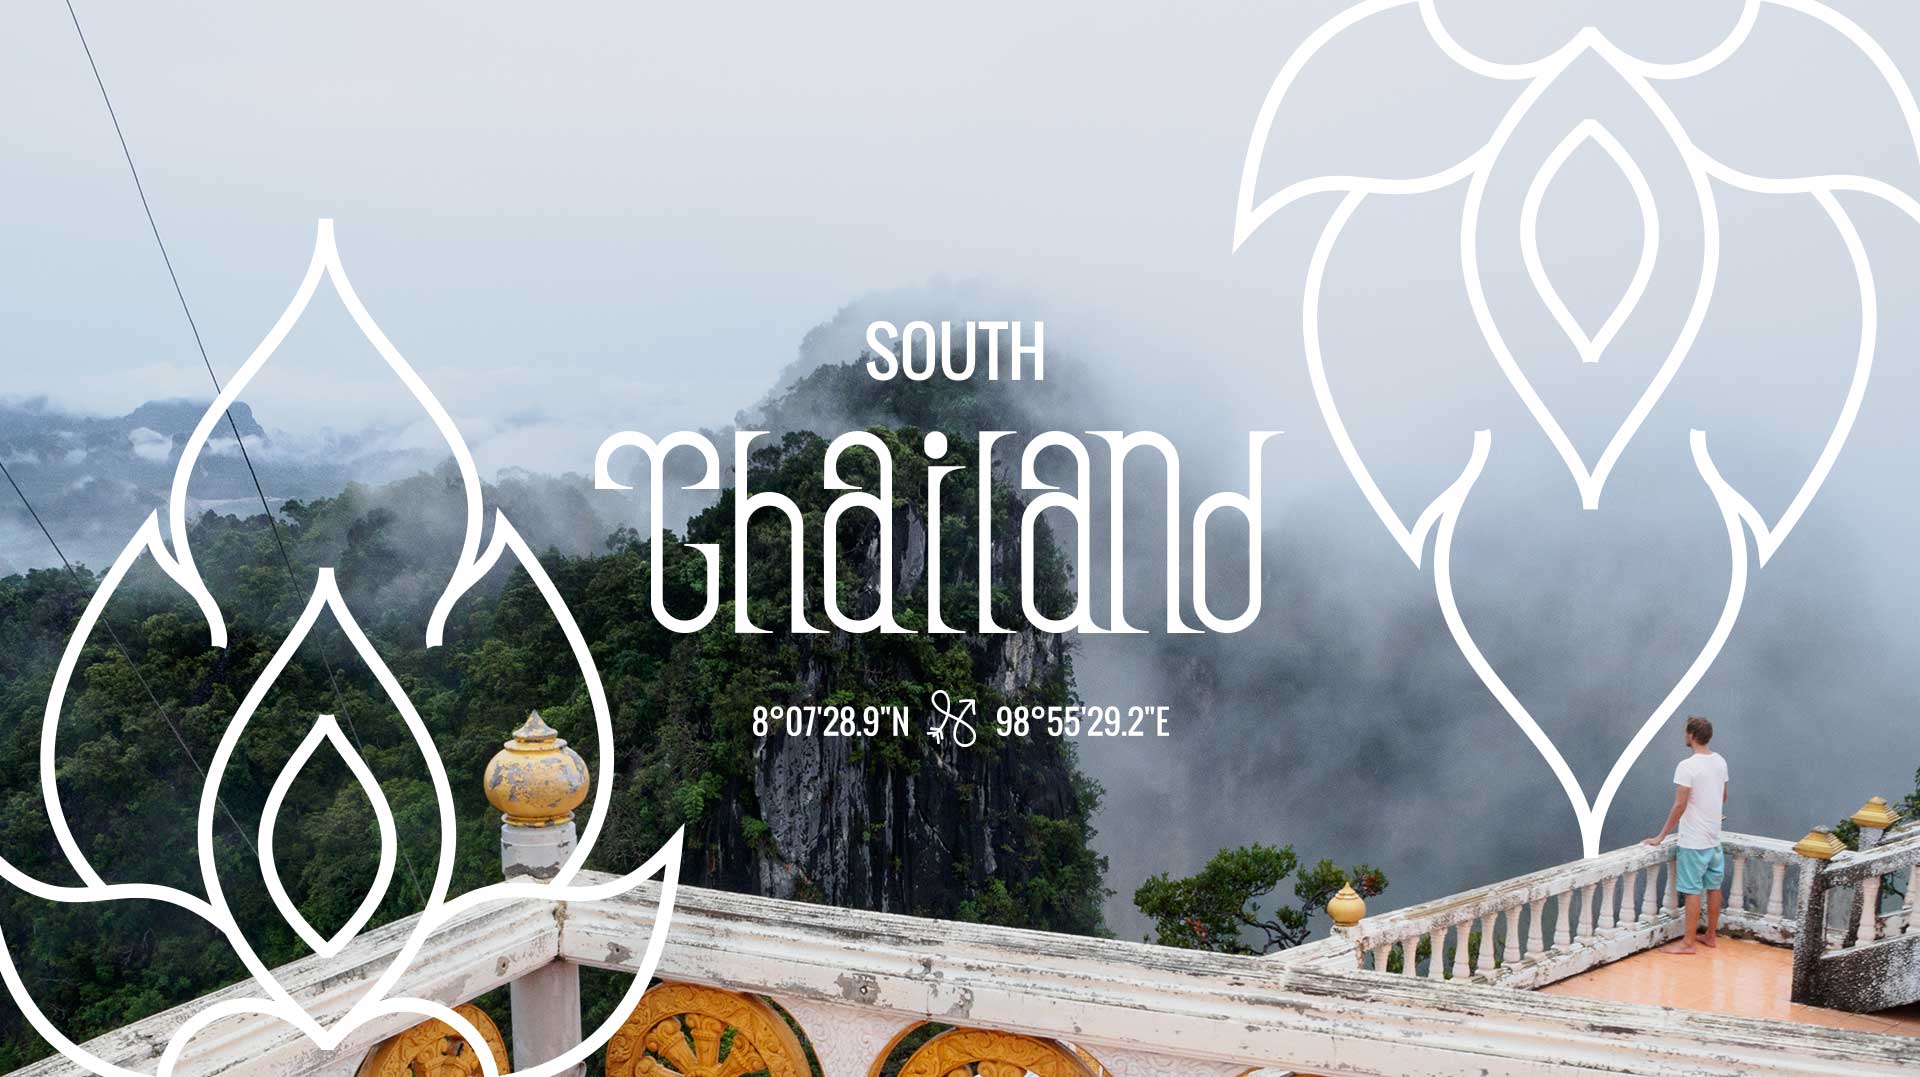 South Thailand - travelbook >> KEEP DRIFTING - way of travel 